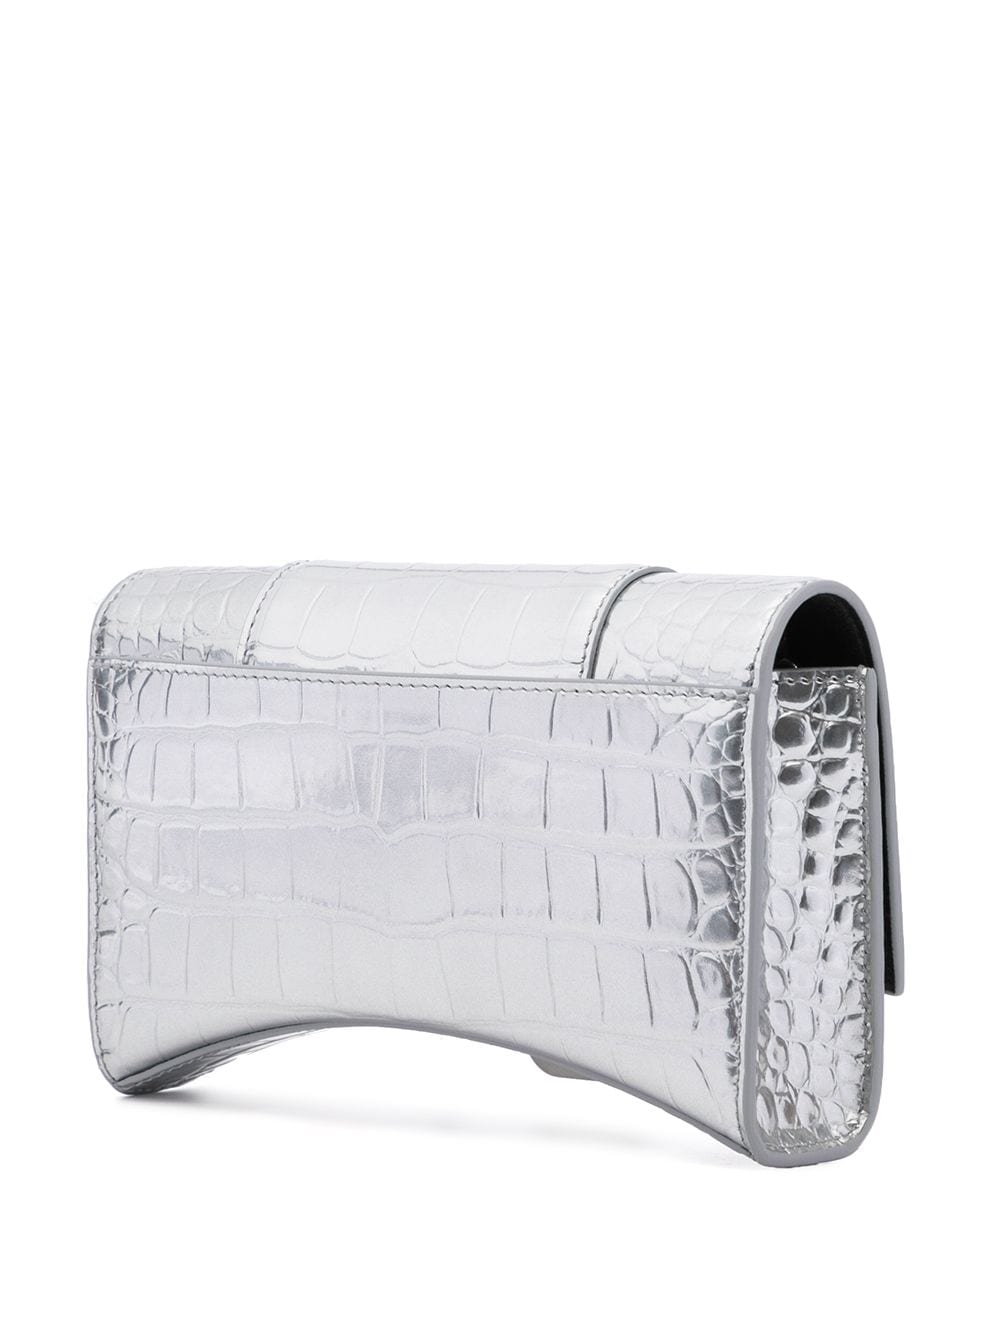 фото Balenciaga кошелек hourglass с тиснением под крокодила